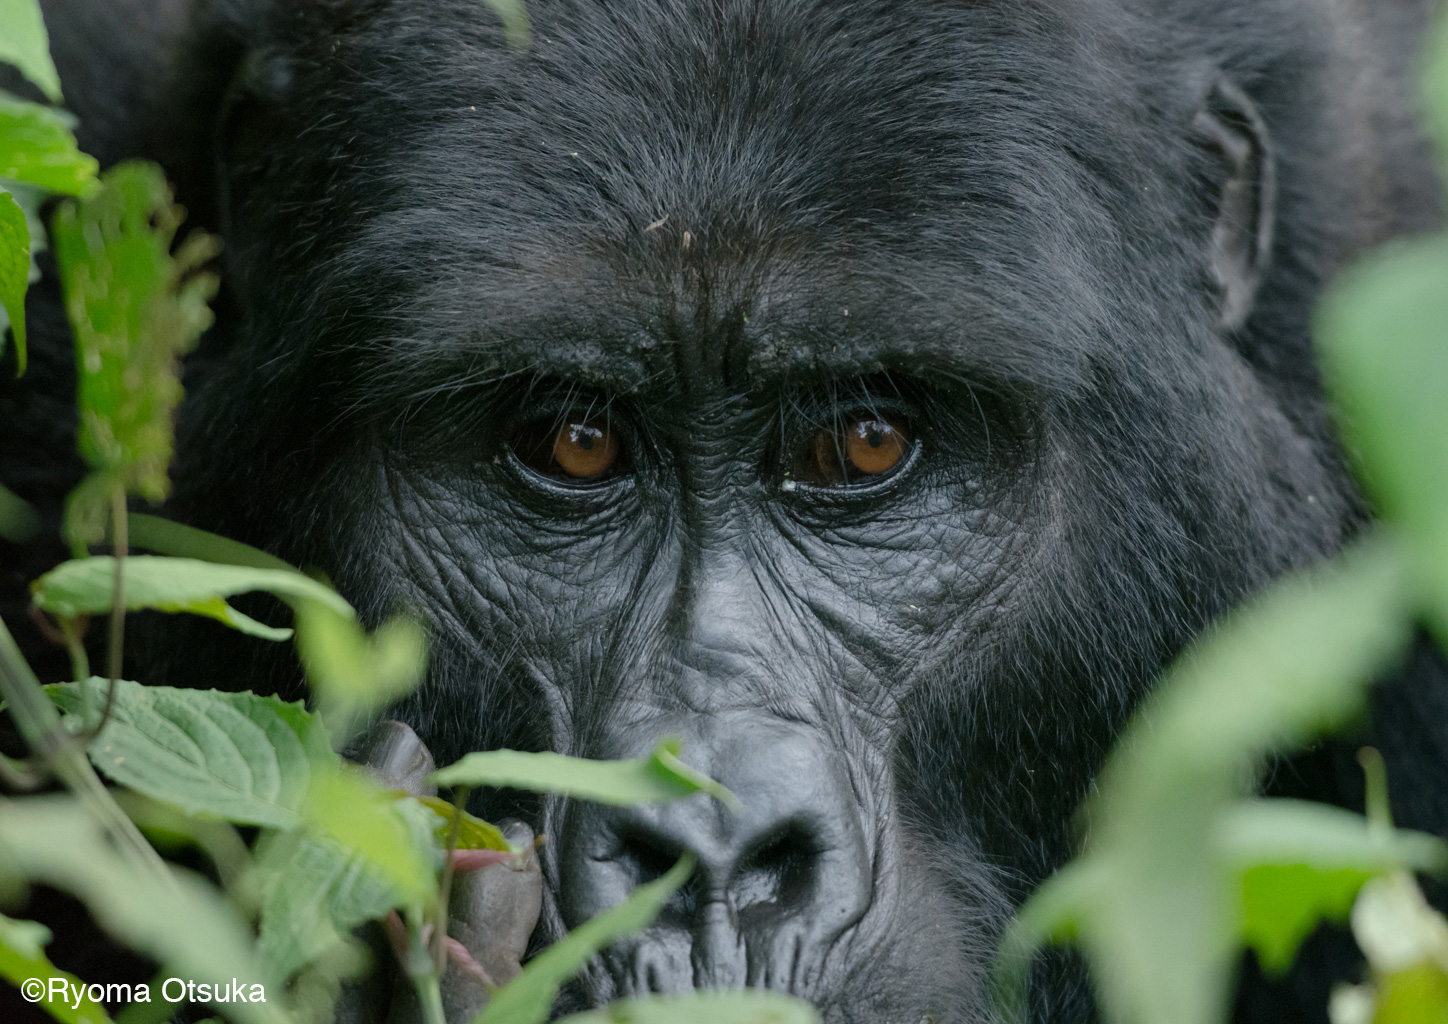 Adult female gorilla, Mitunu from the Mubare family, Bwindi, Uganda. Photo Ryoma Otsuka